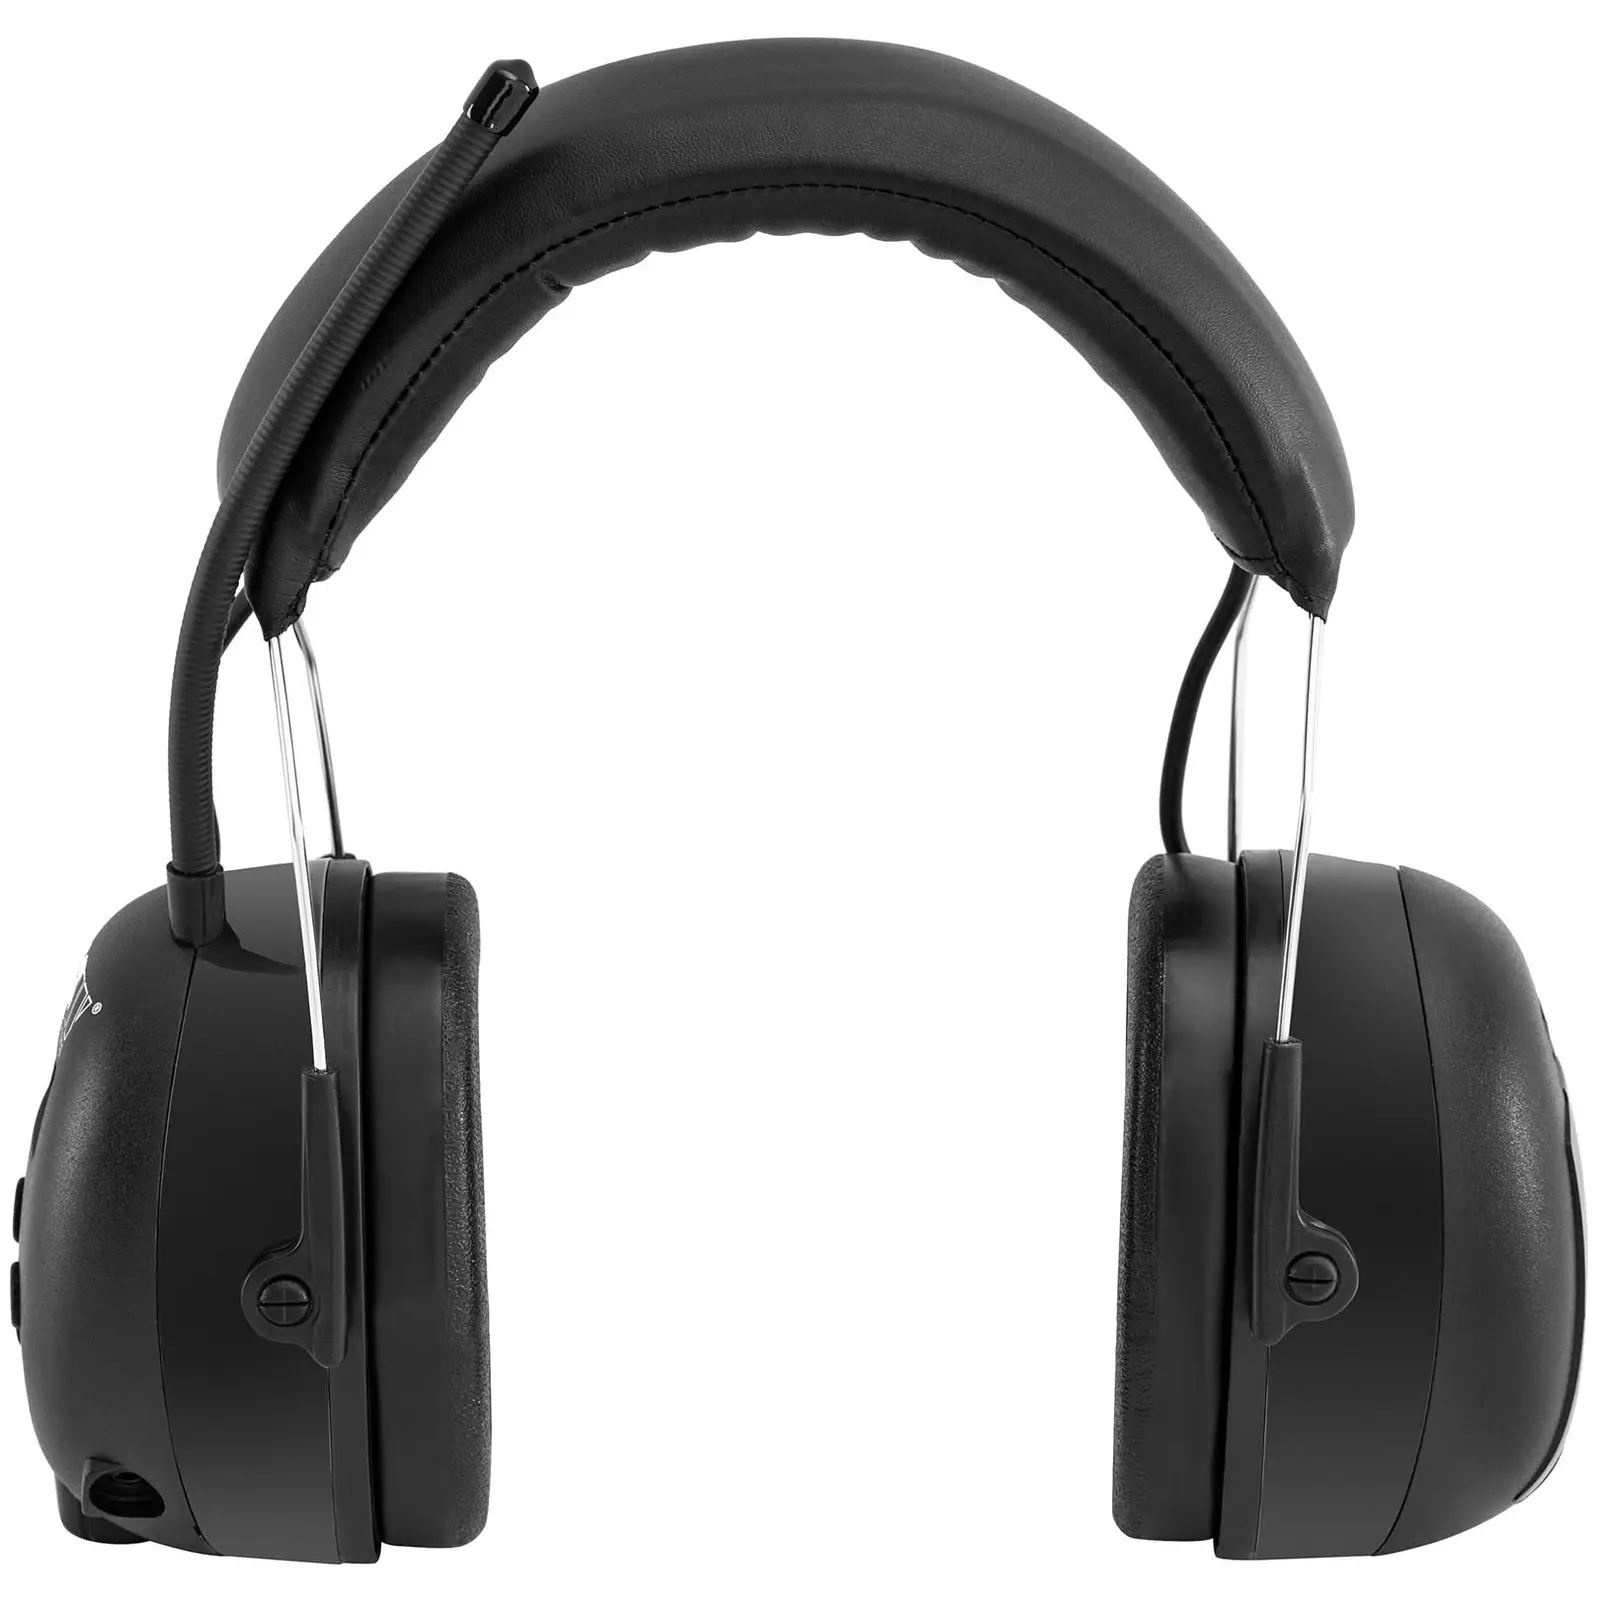 Gehörschutz mit Bluetooth - Mikrofon - LCD-Display - Akku - Schwarz